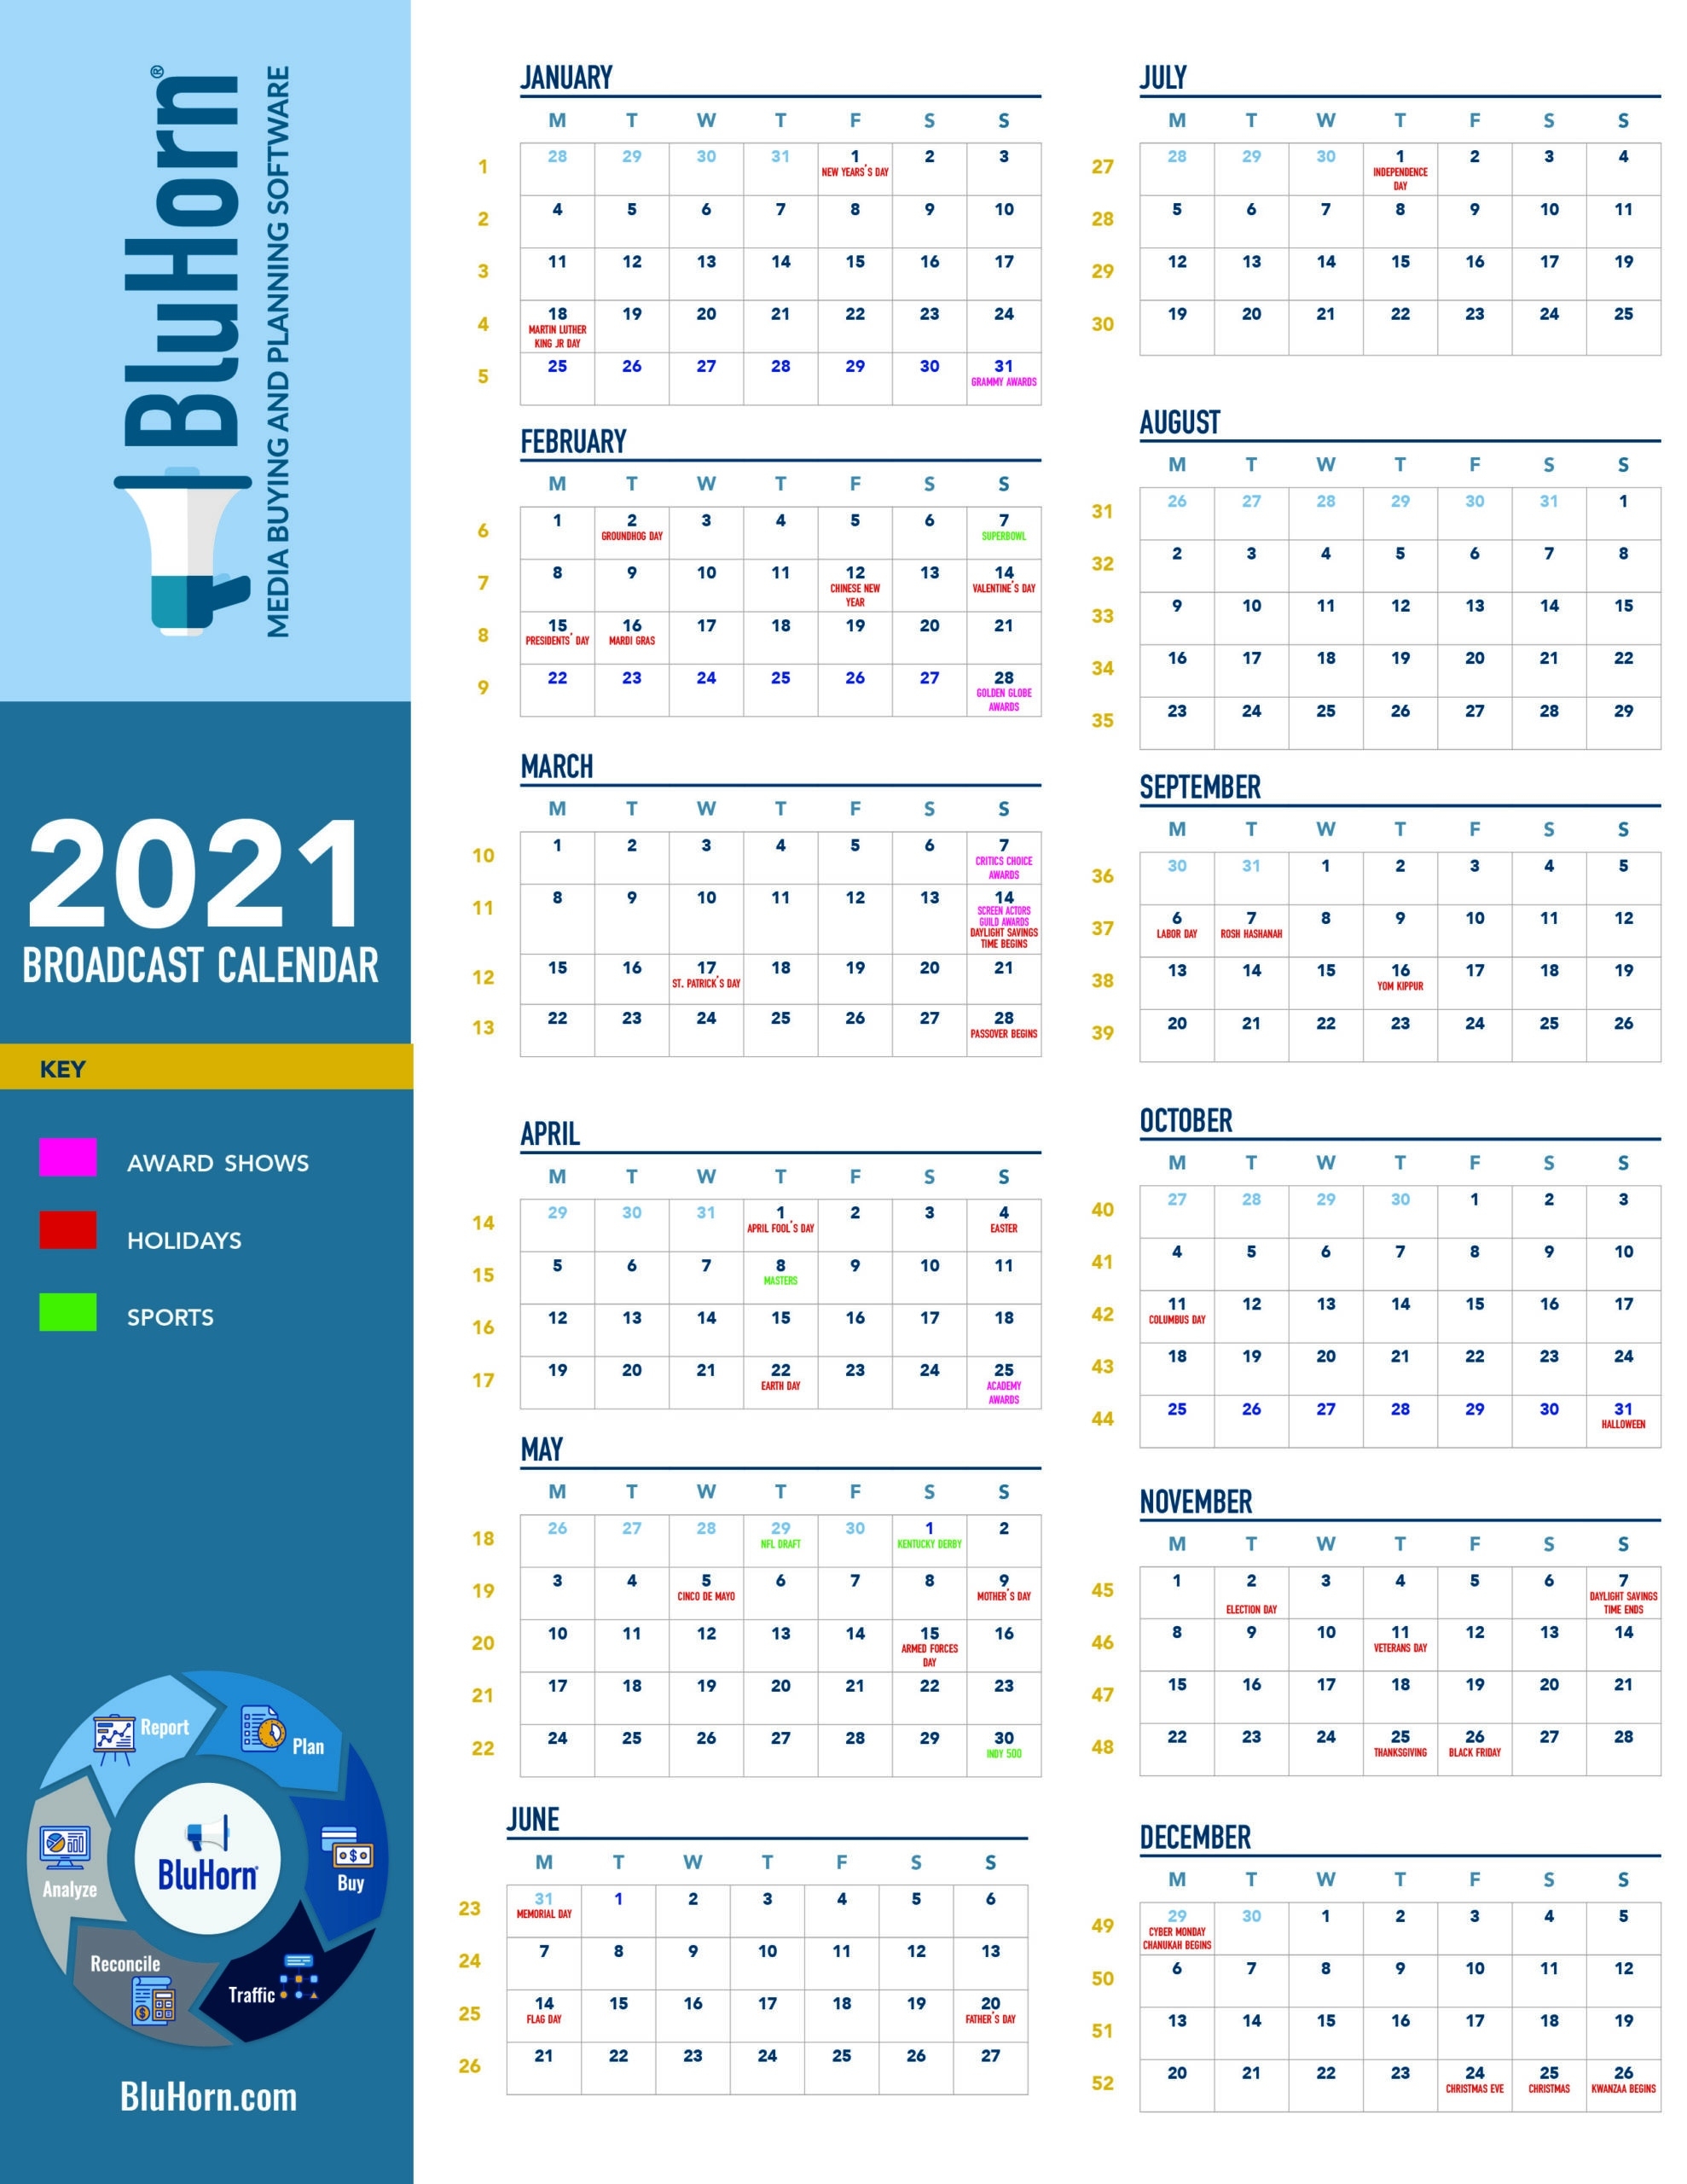 Free Broadcast Calendar | Bluhorn Print 2021 Broadcast Calendar